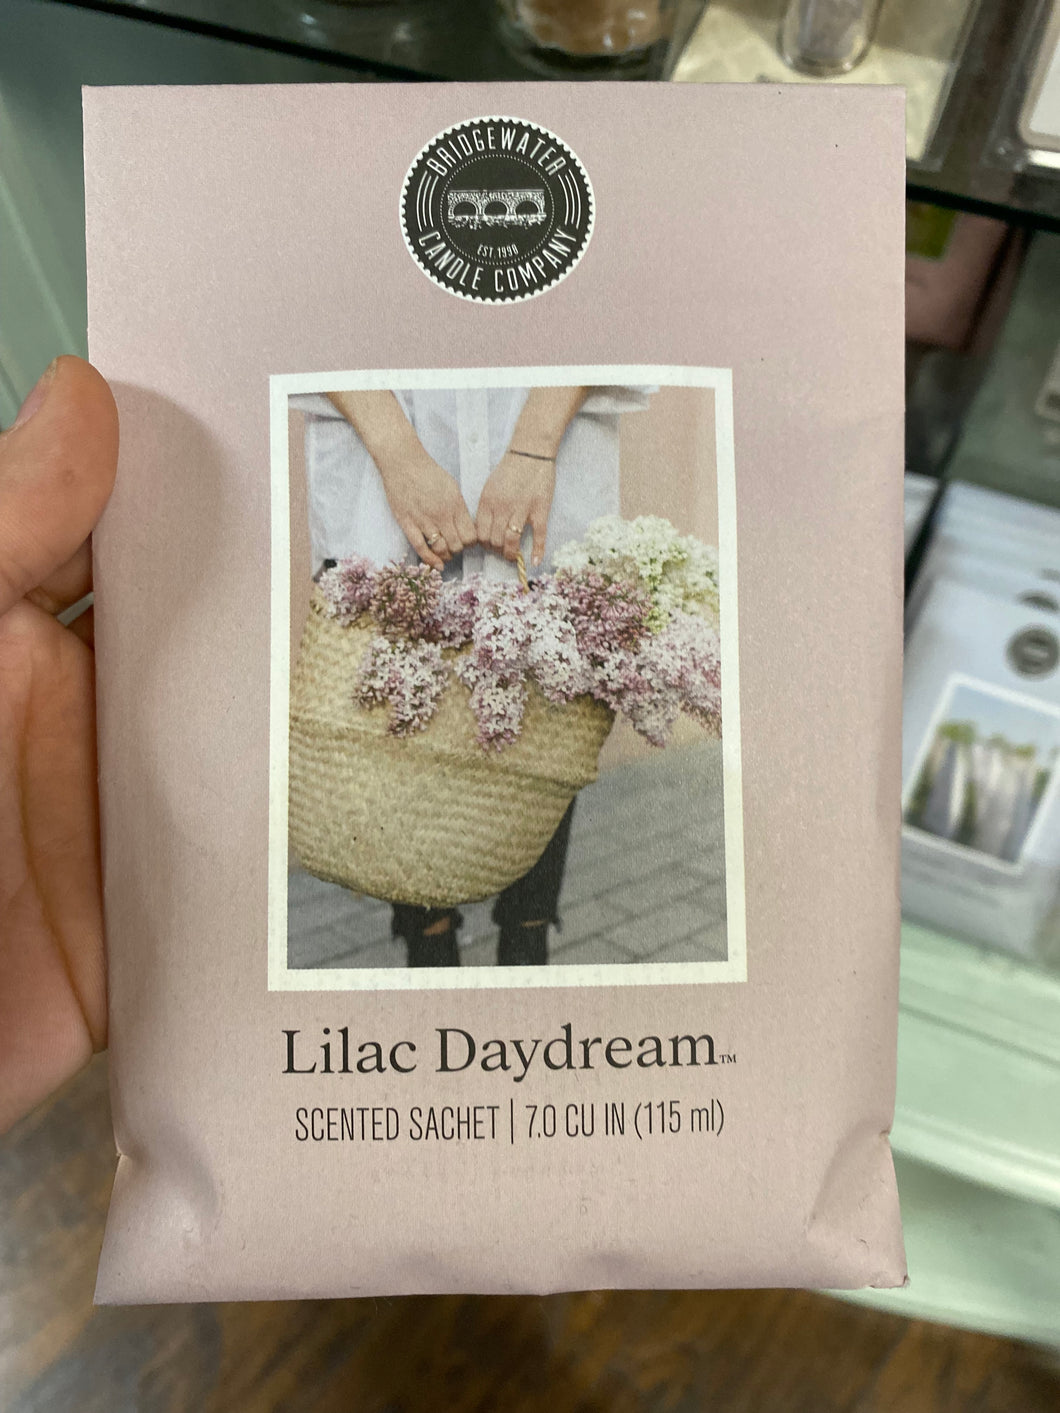 Lilac Daydream Sachet